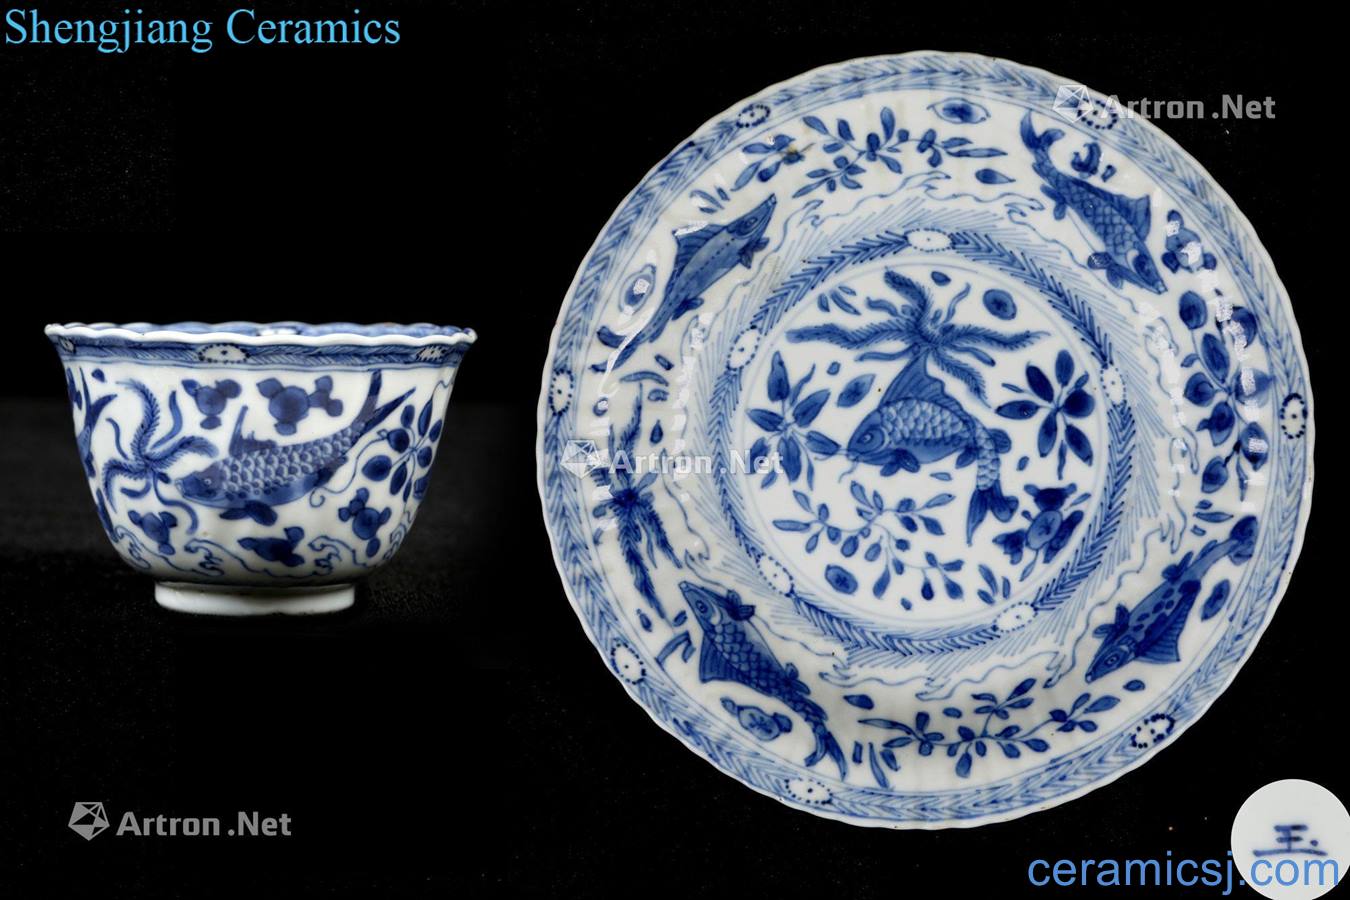 In the 18th century Kangxi porcelain carp paddle teacup saucer